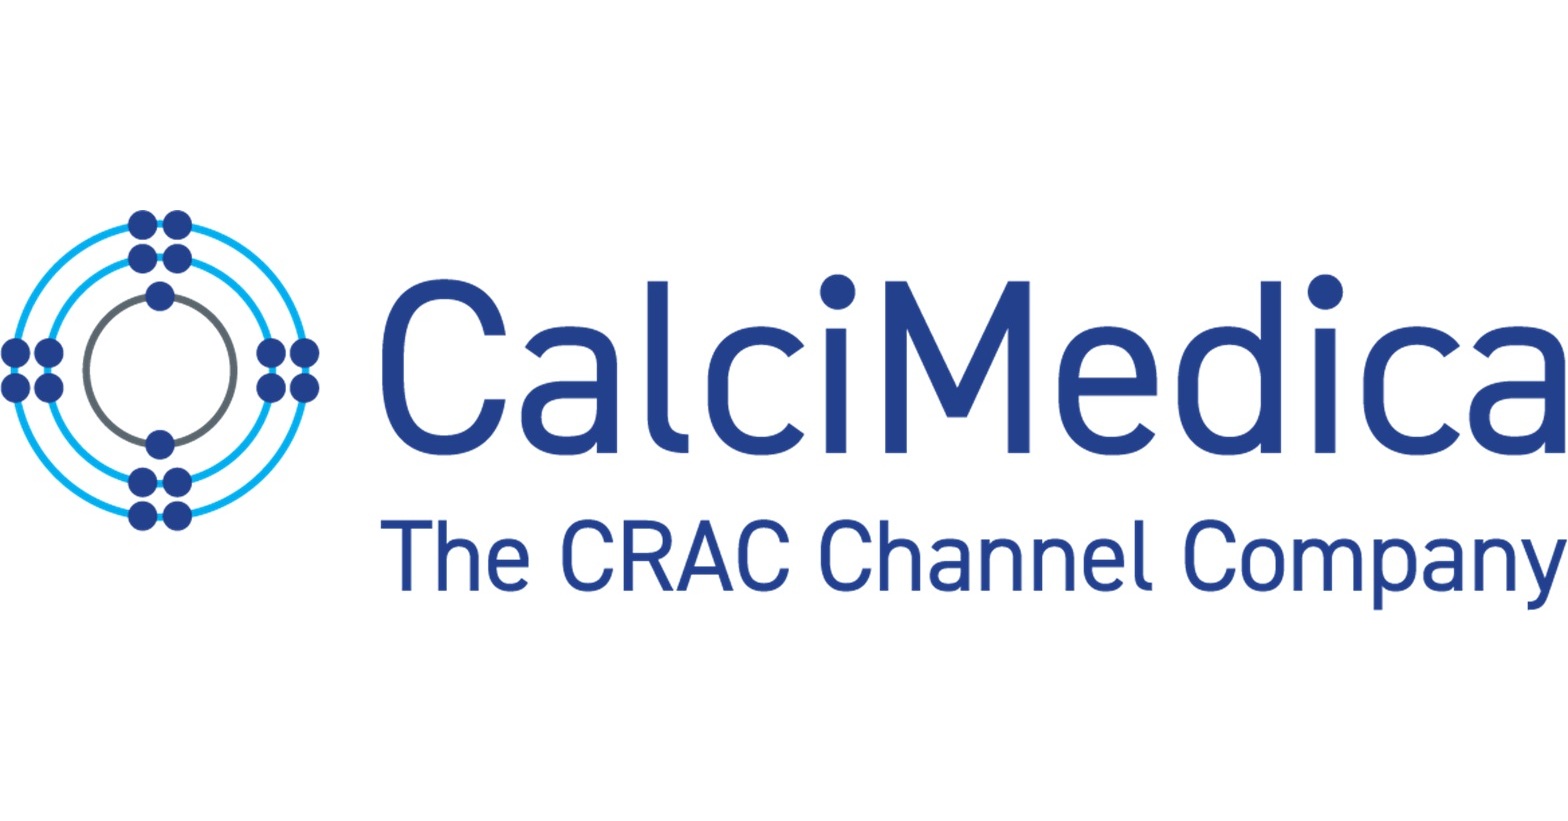 calcimedica_Logo.jpg